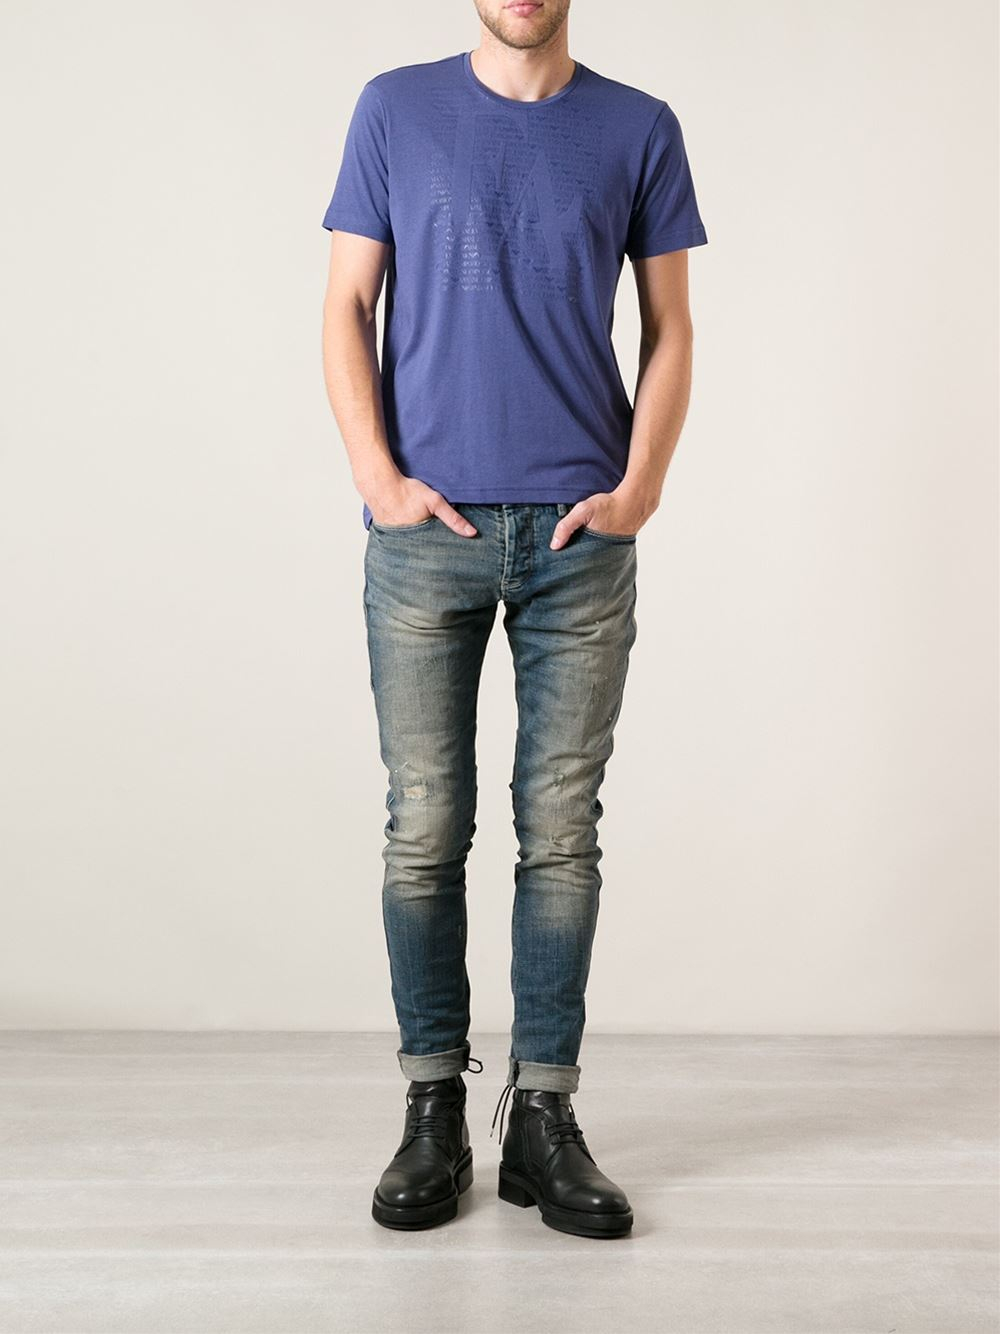 Lyst - Emporio Armani Skinny Jeans in Blue for Men